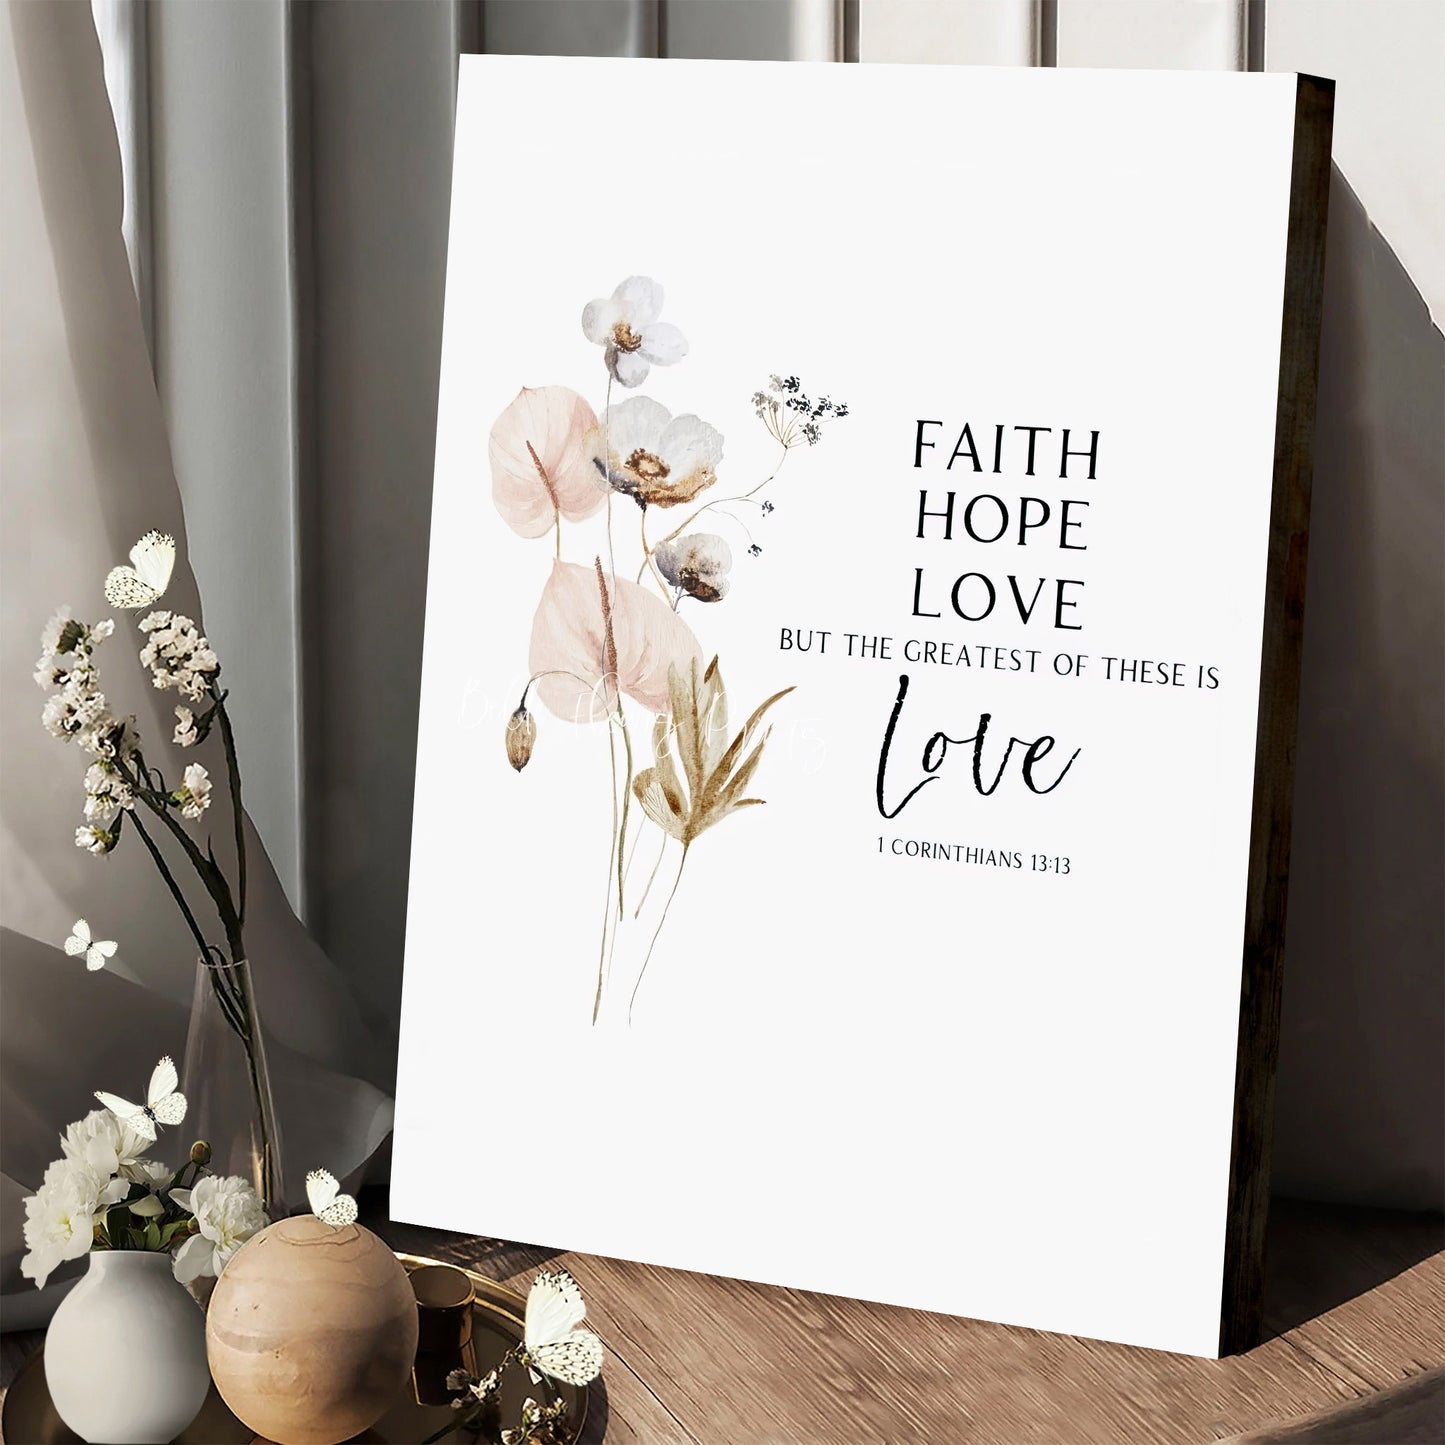 Faith Hope Love Wall Art Canvas -1 Corinthians 13 Poster Gift